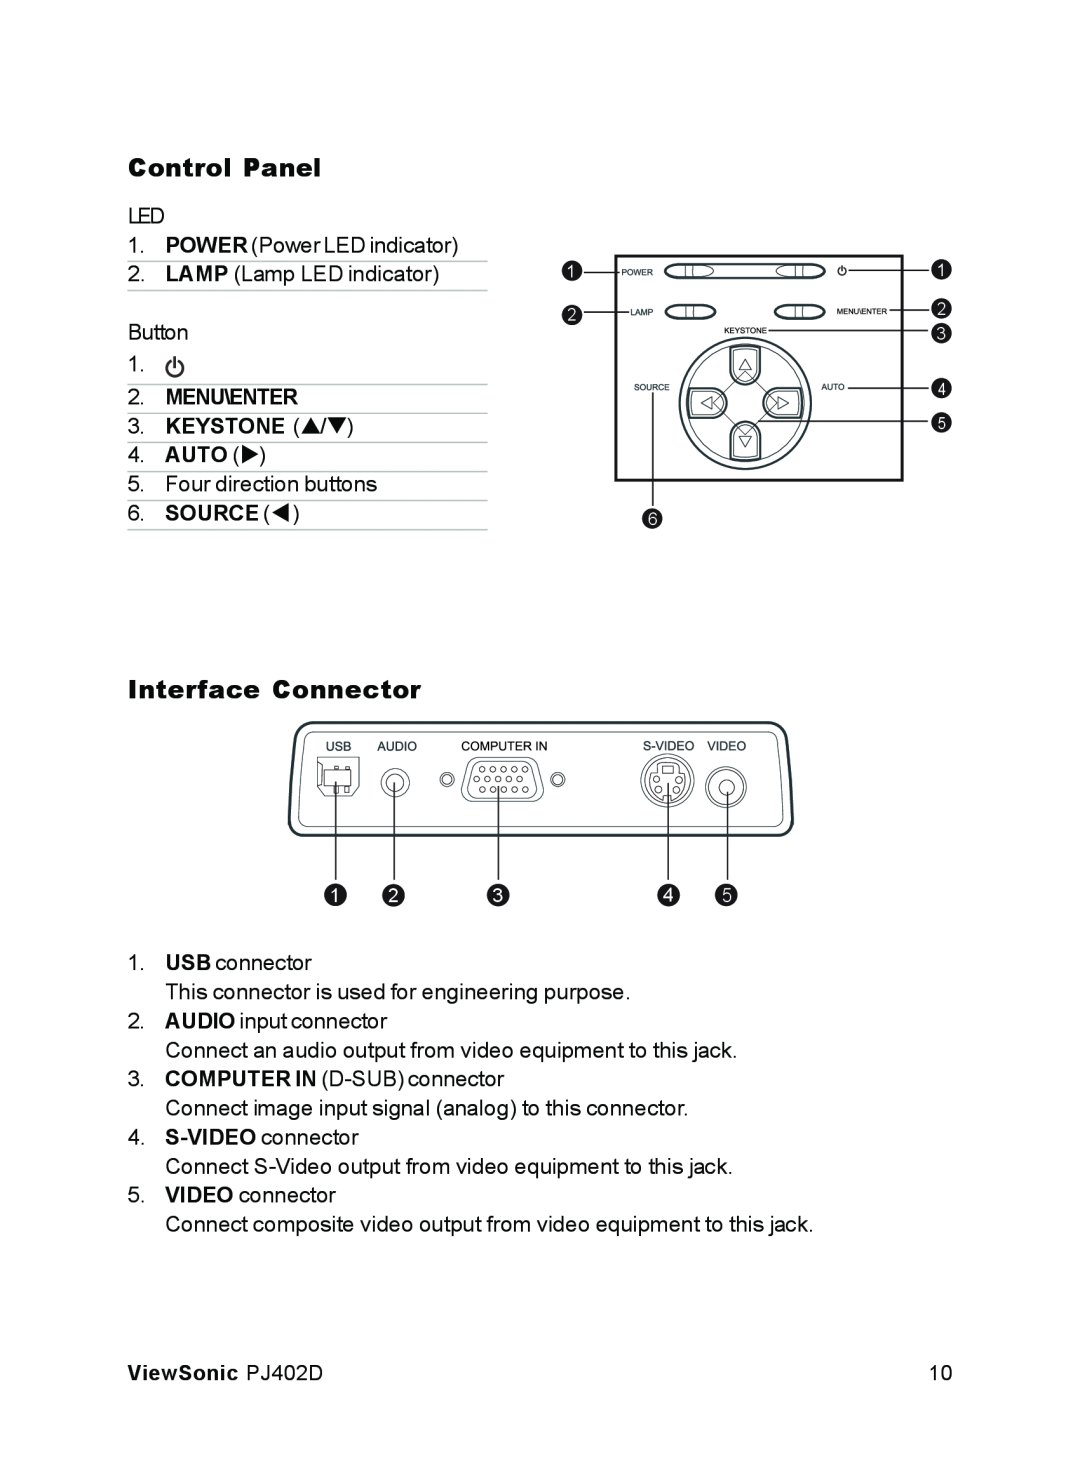 ViewSonic PJ402D manual Control Panel, Interface Connector 